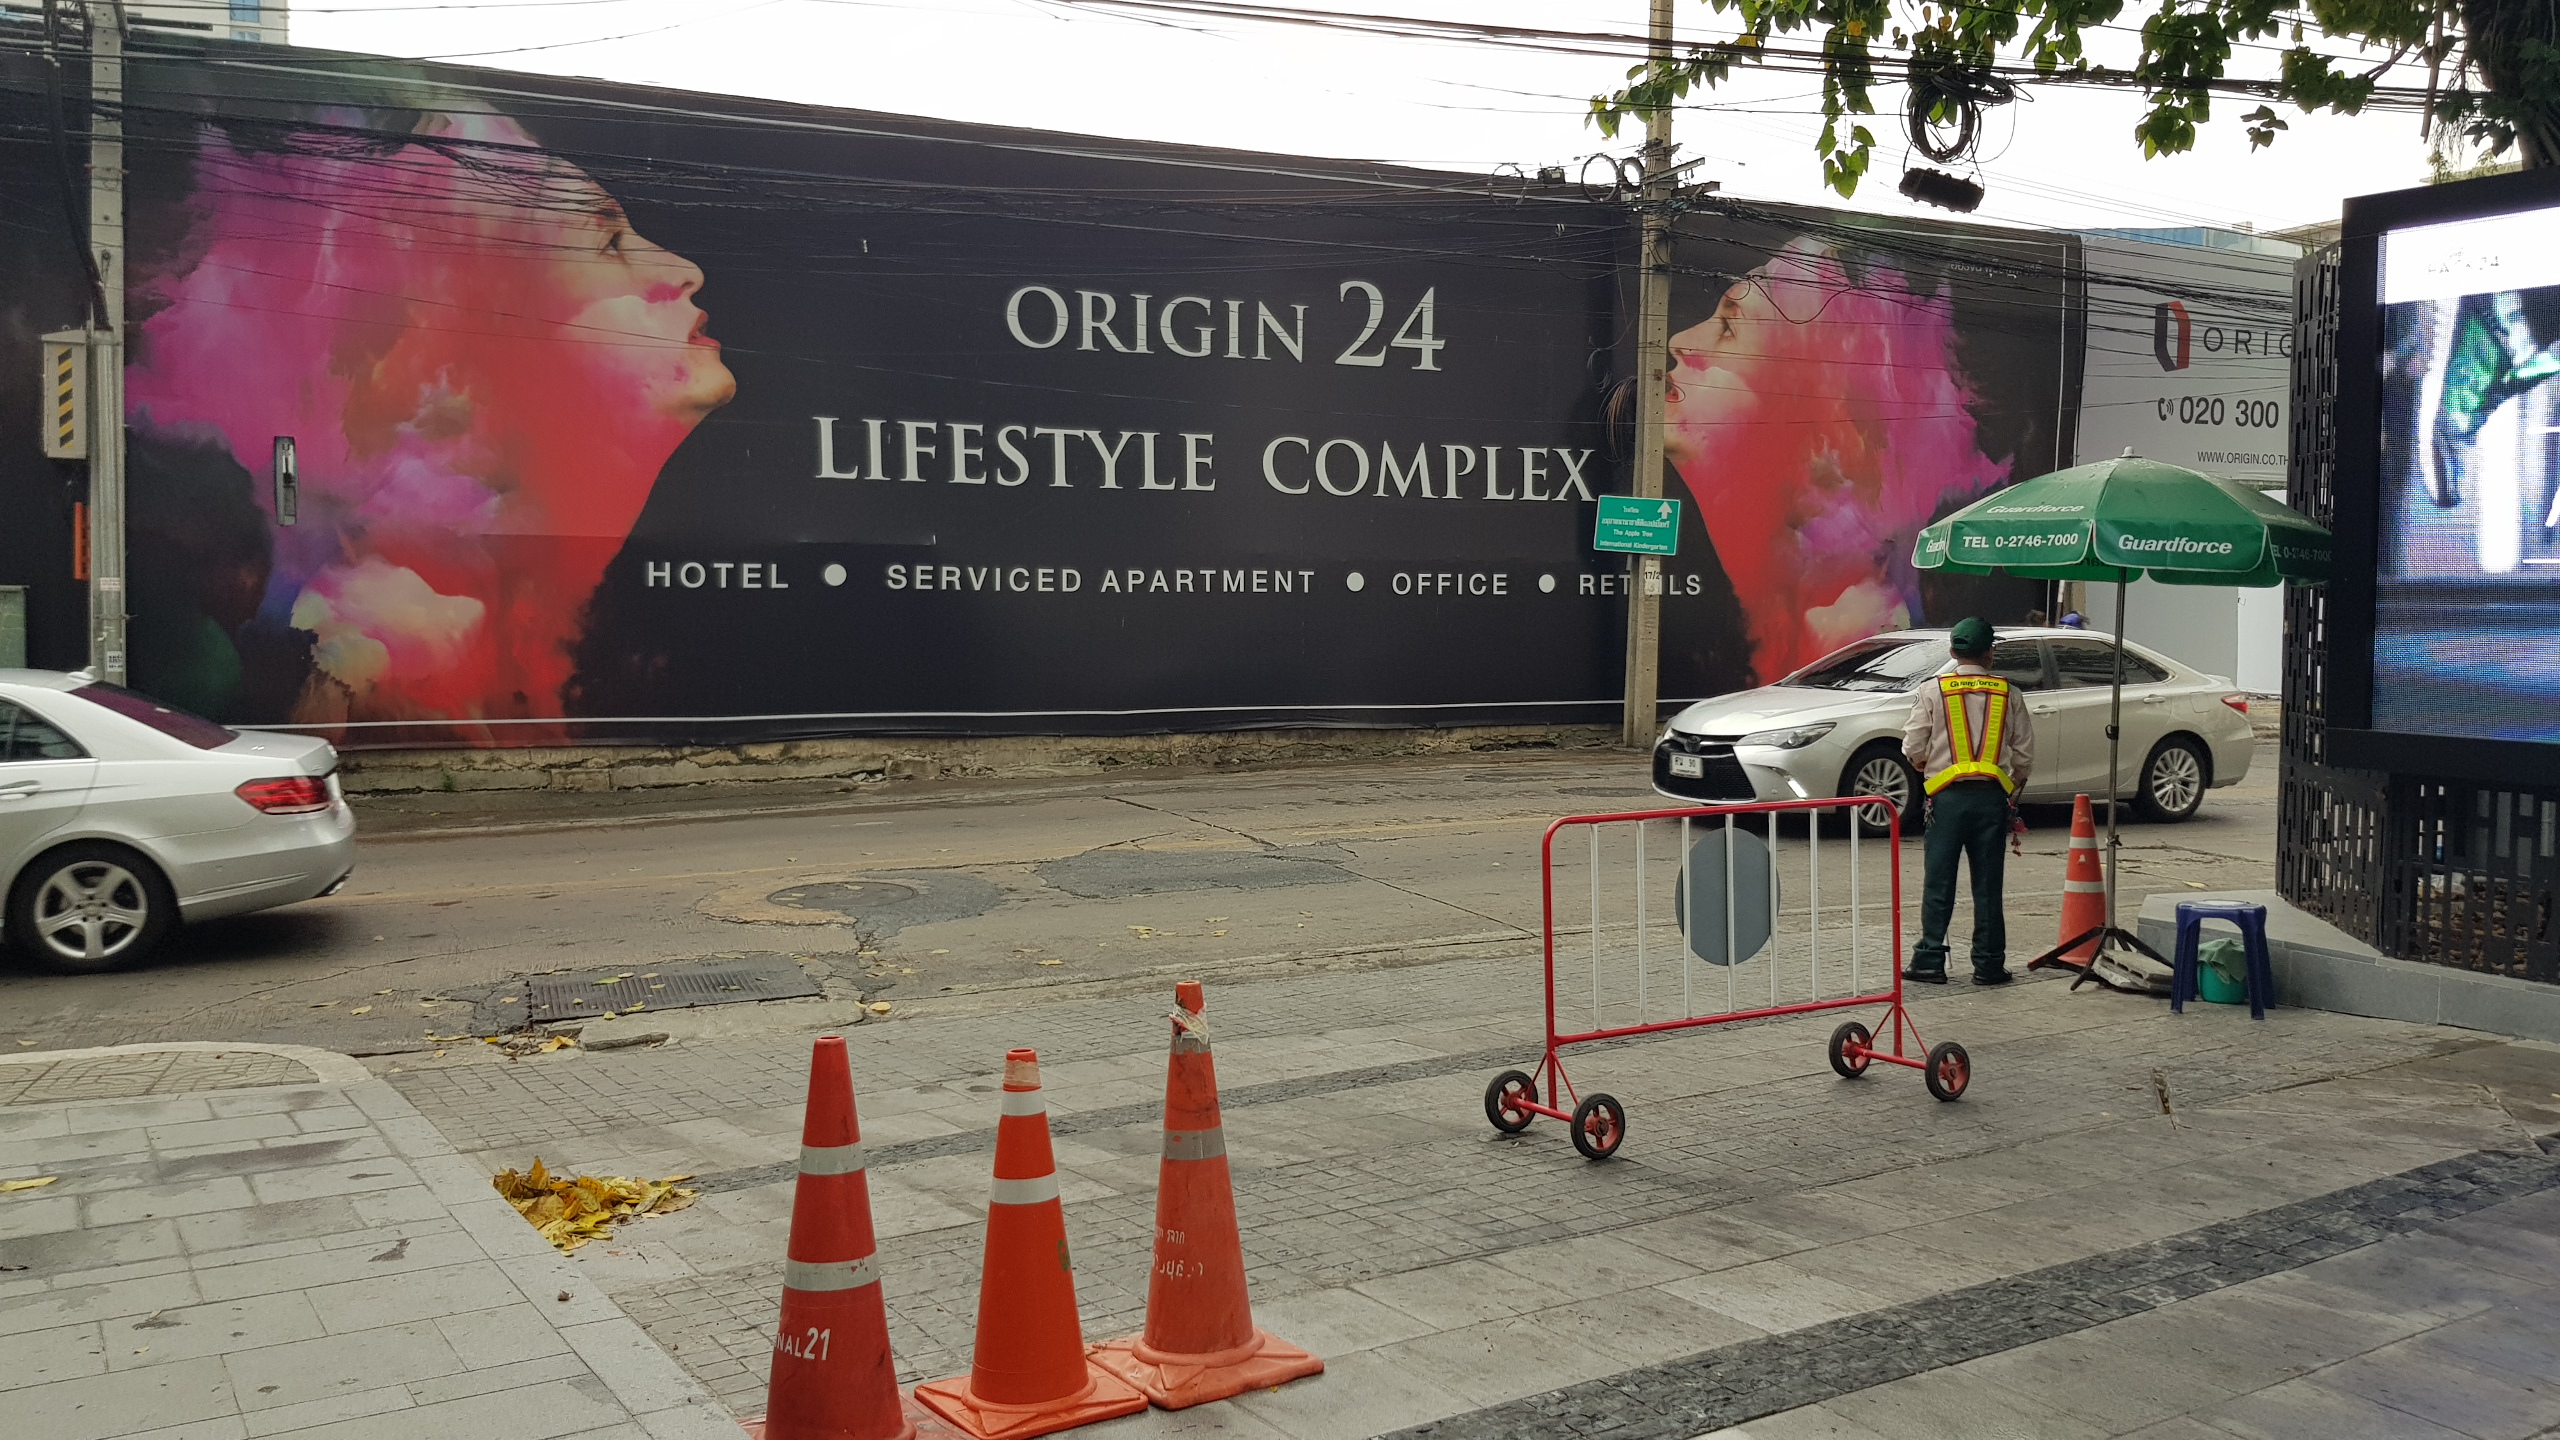 “Origin 24”, a forthcoming 4-5 billion-baht mixed-use development by ORIGIN PROPERTY